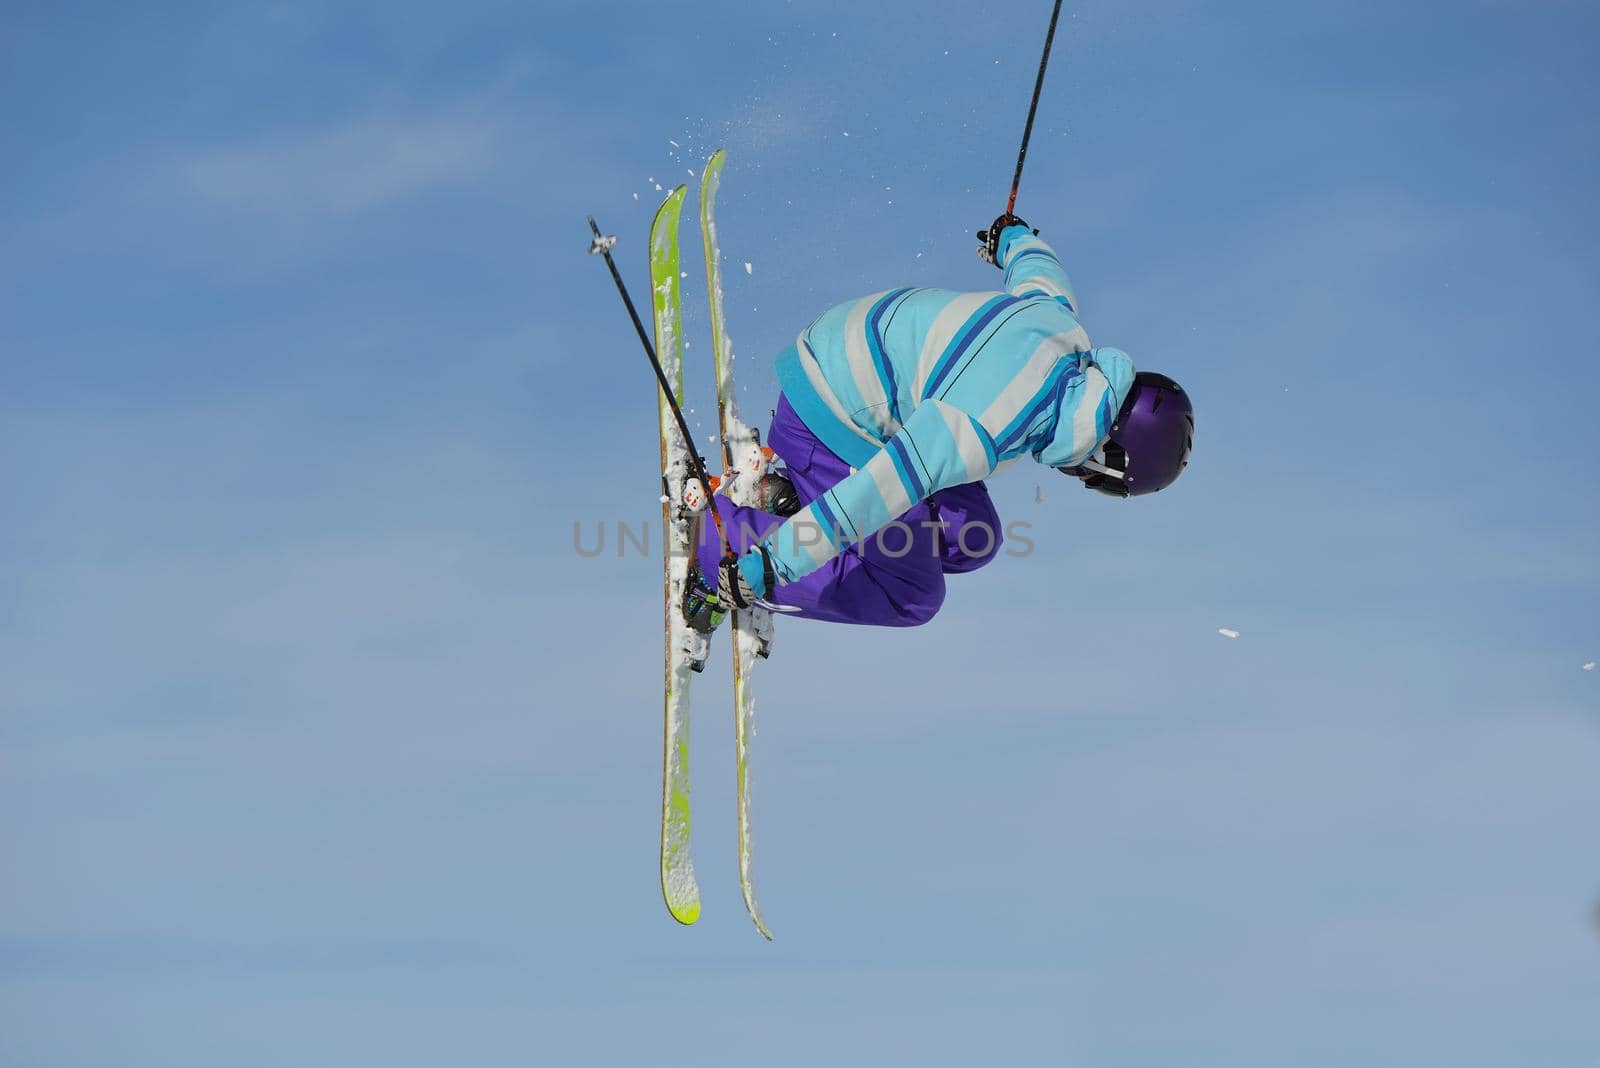 skier by dotshock